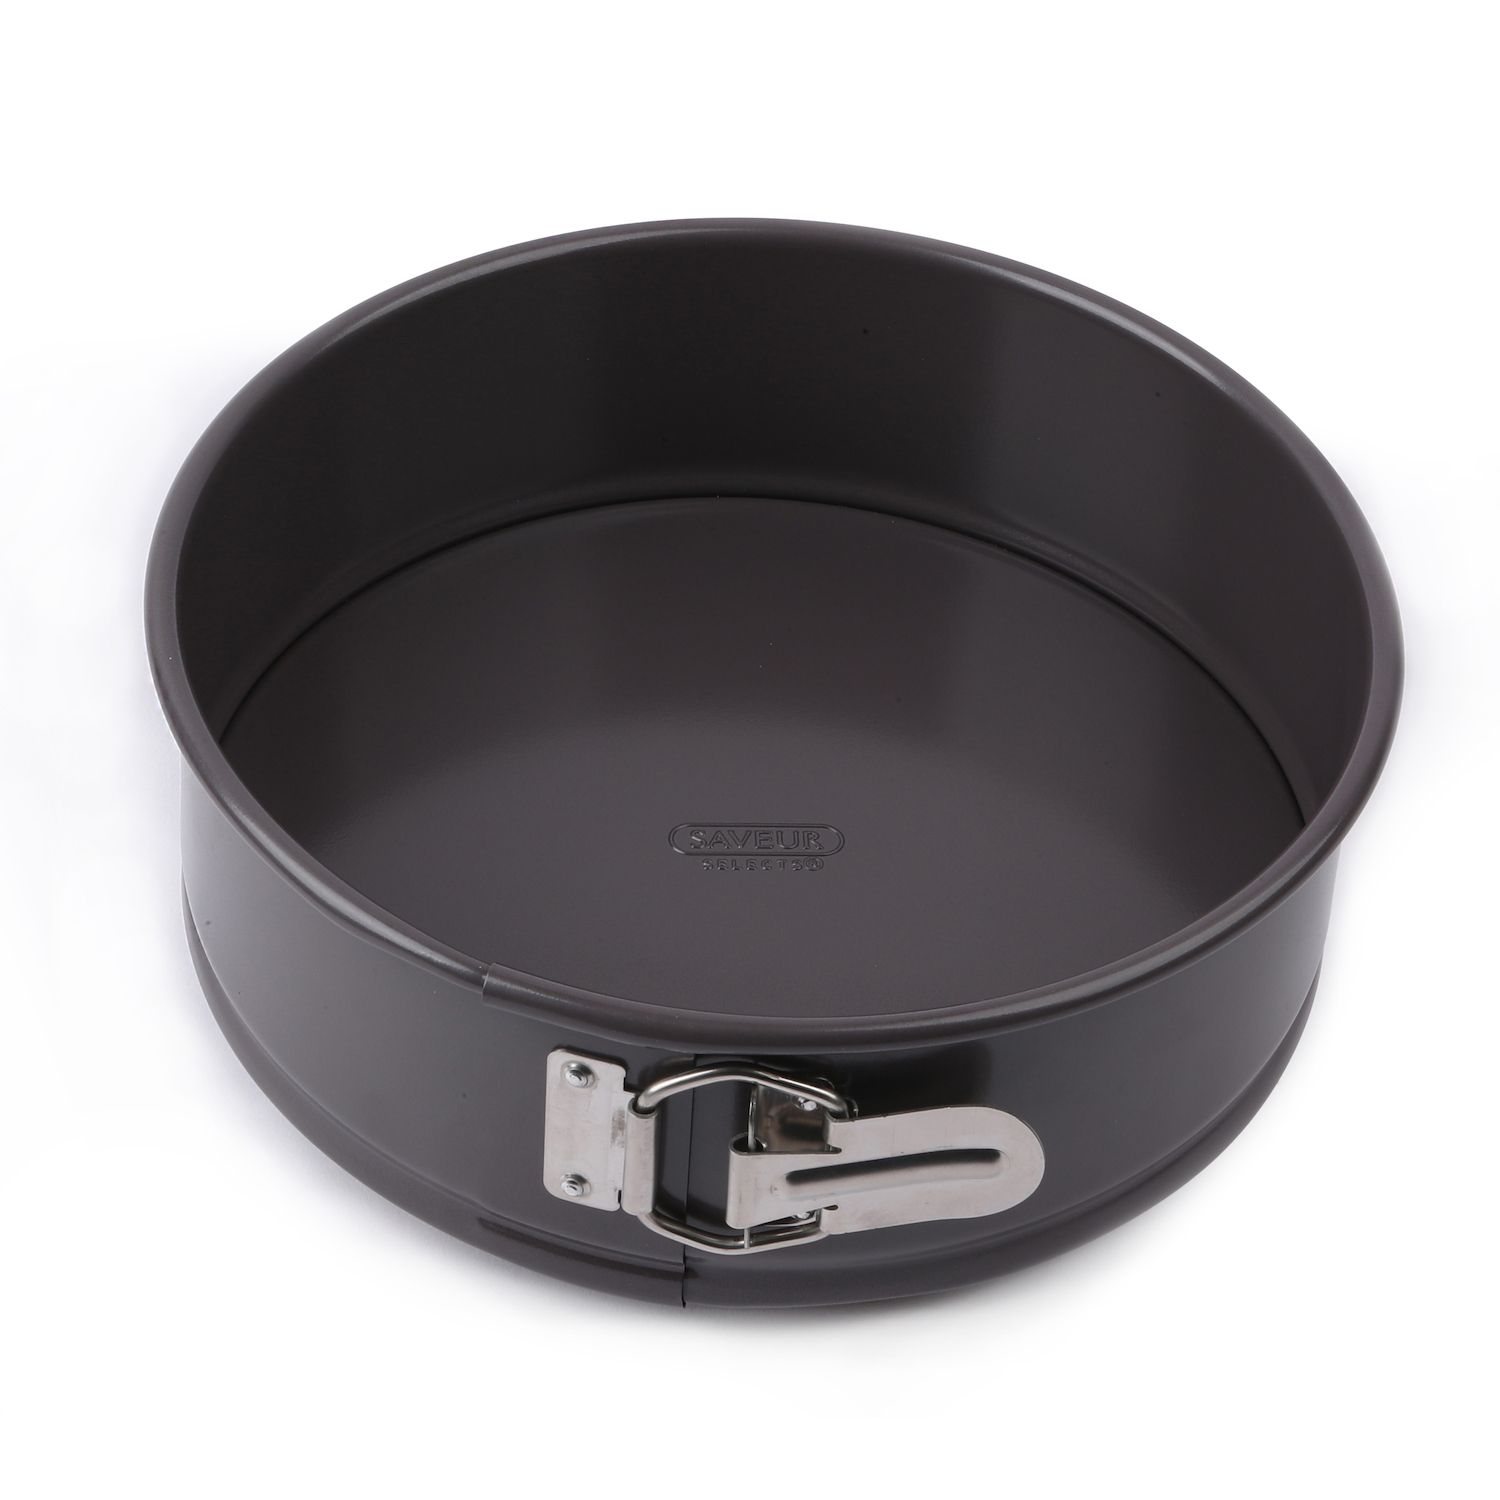 9"Inch Springform Pan Set Non-Stick Cheesecake Pan, Leakproof